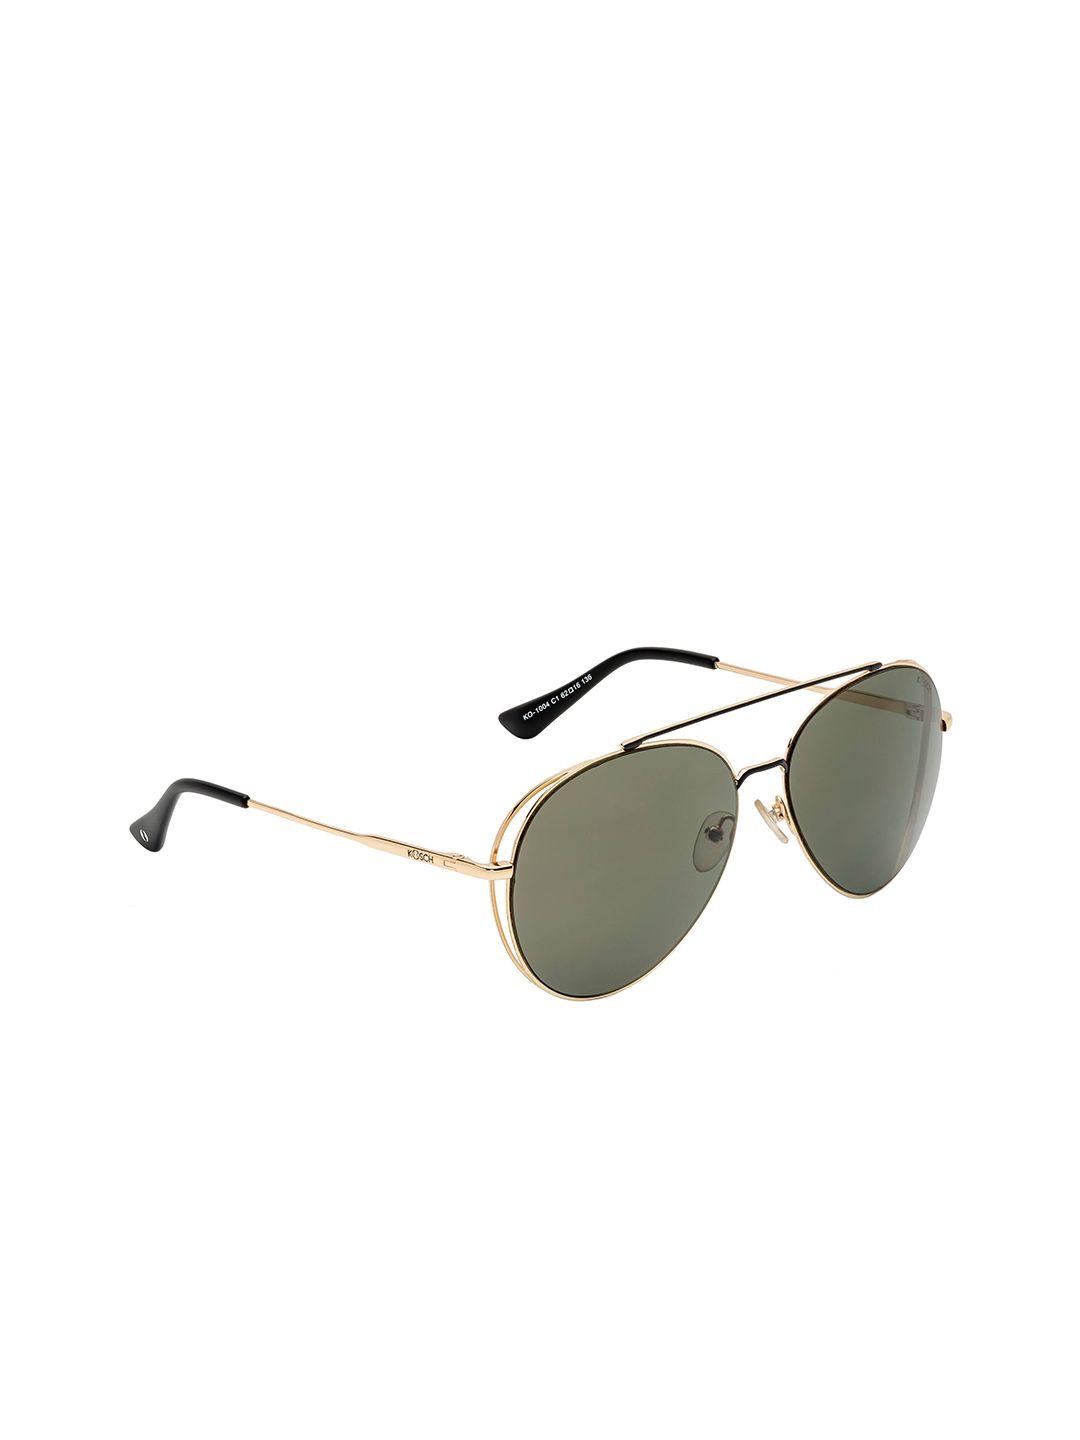 kosch elemente men green lens & gold-toned aviator sunglasses - ko 1004